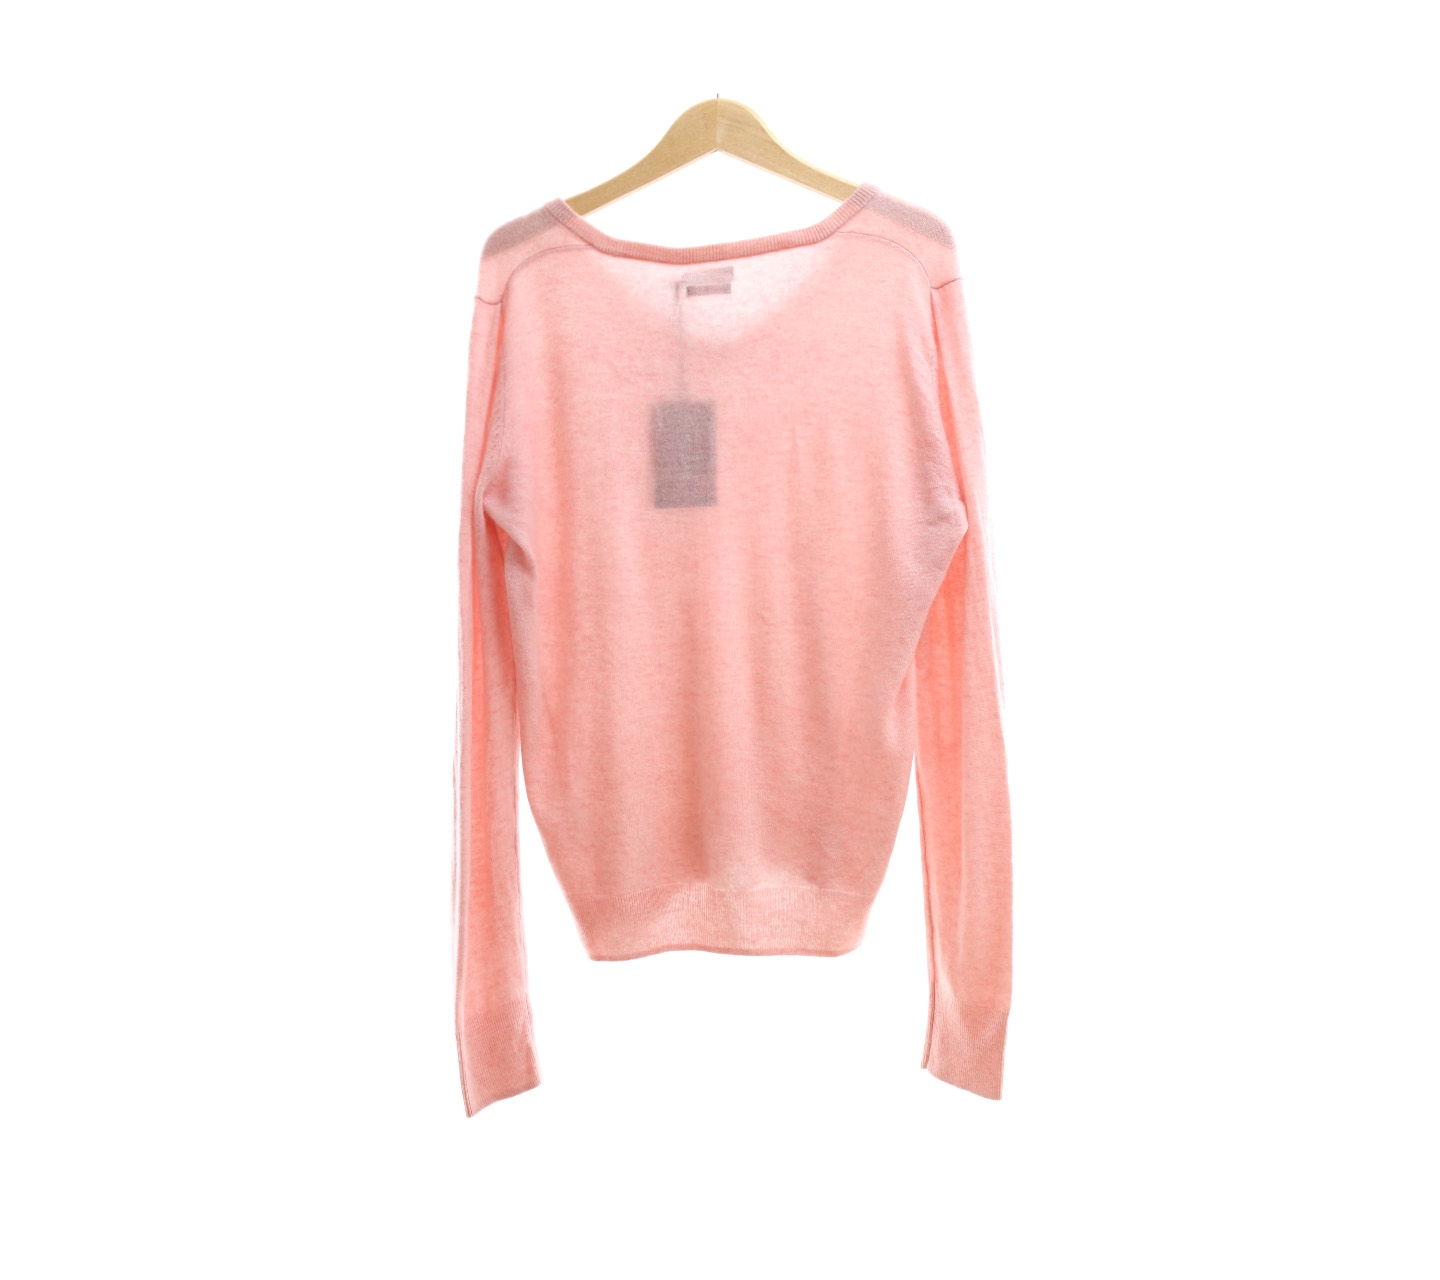 Galeries lafayette Pink Sweater